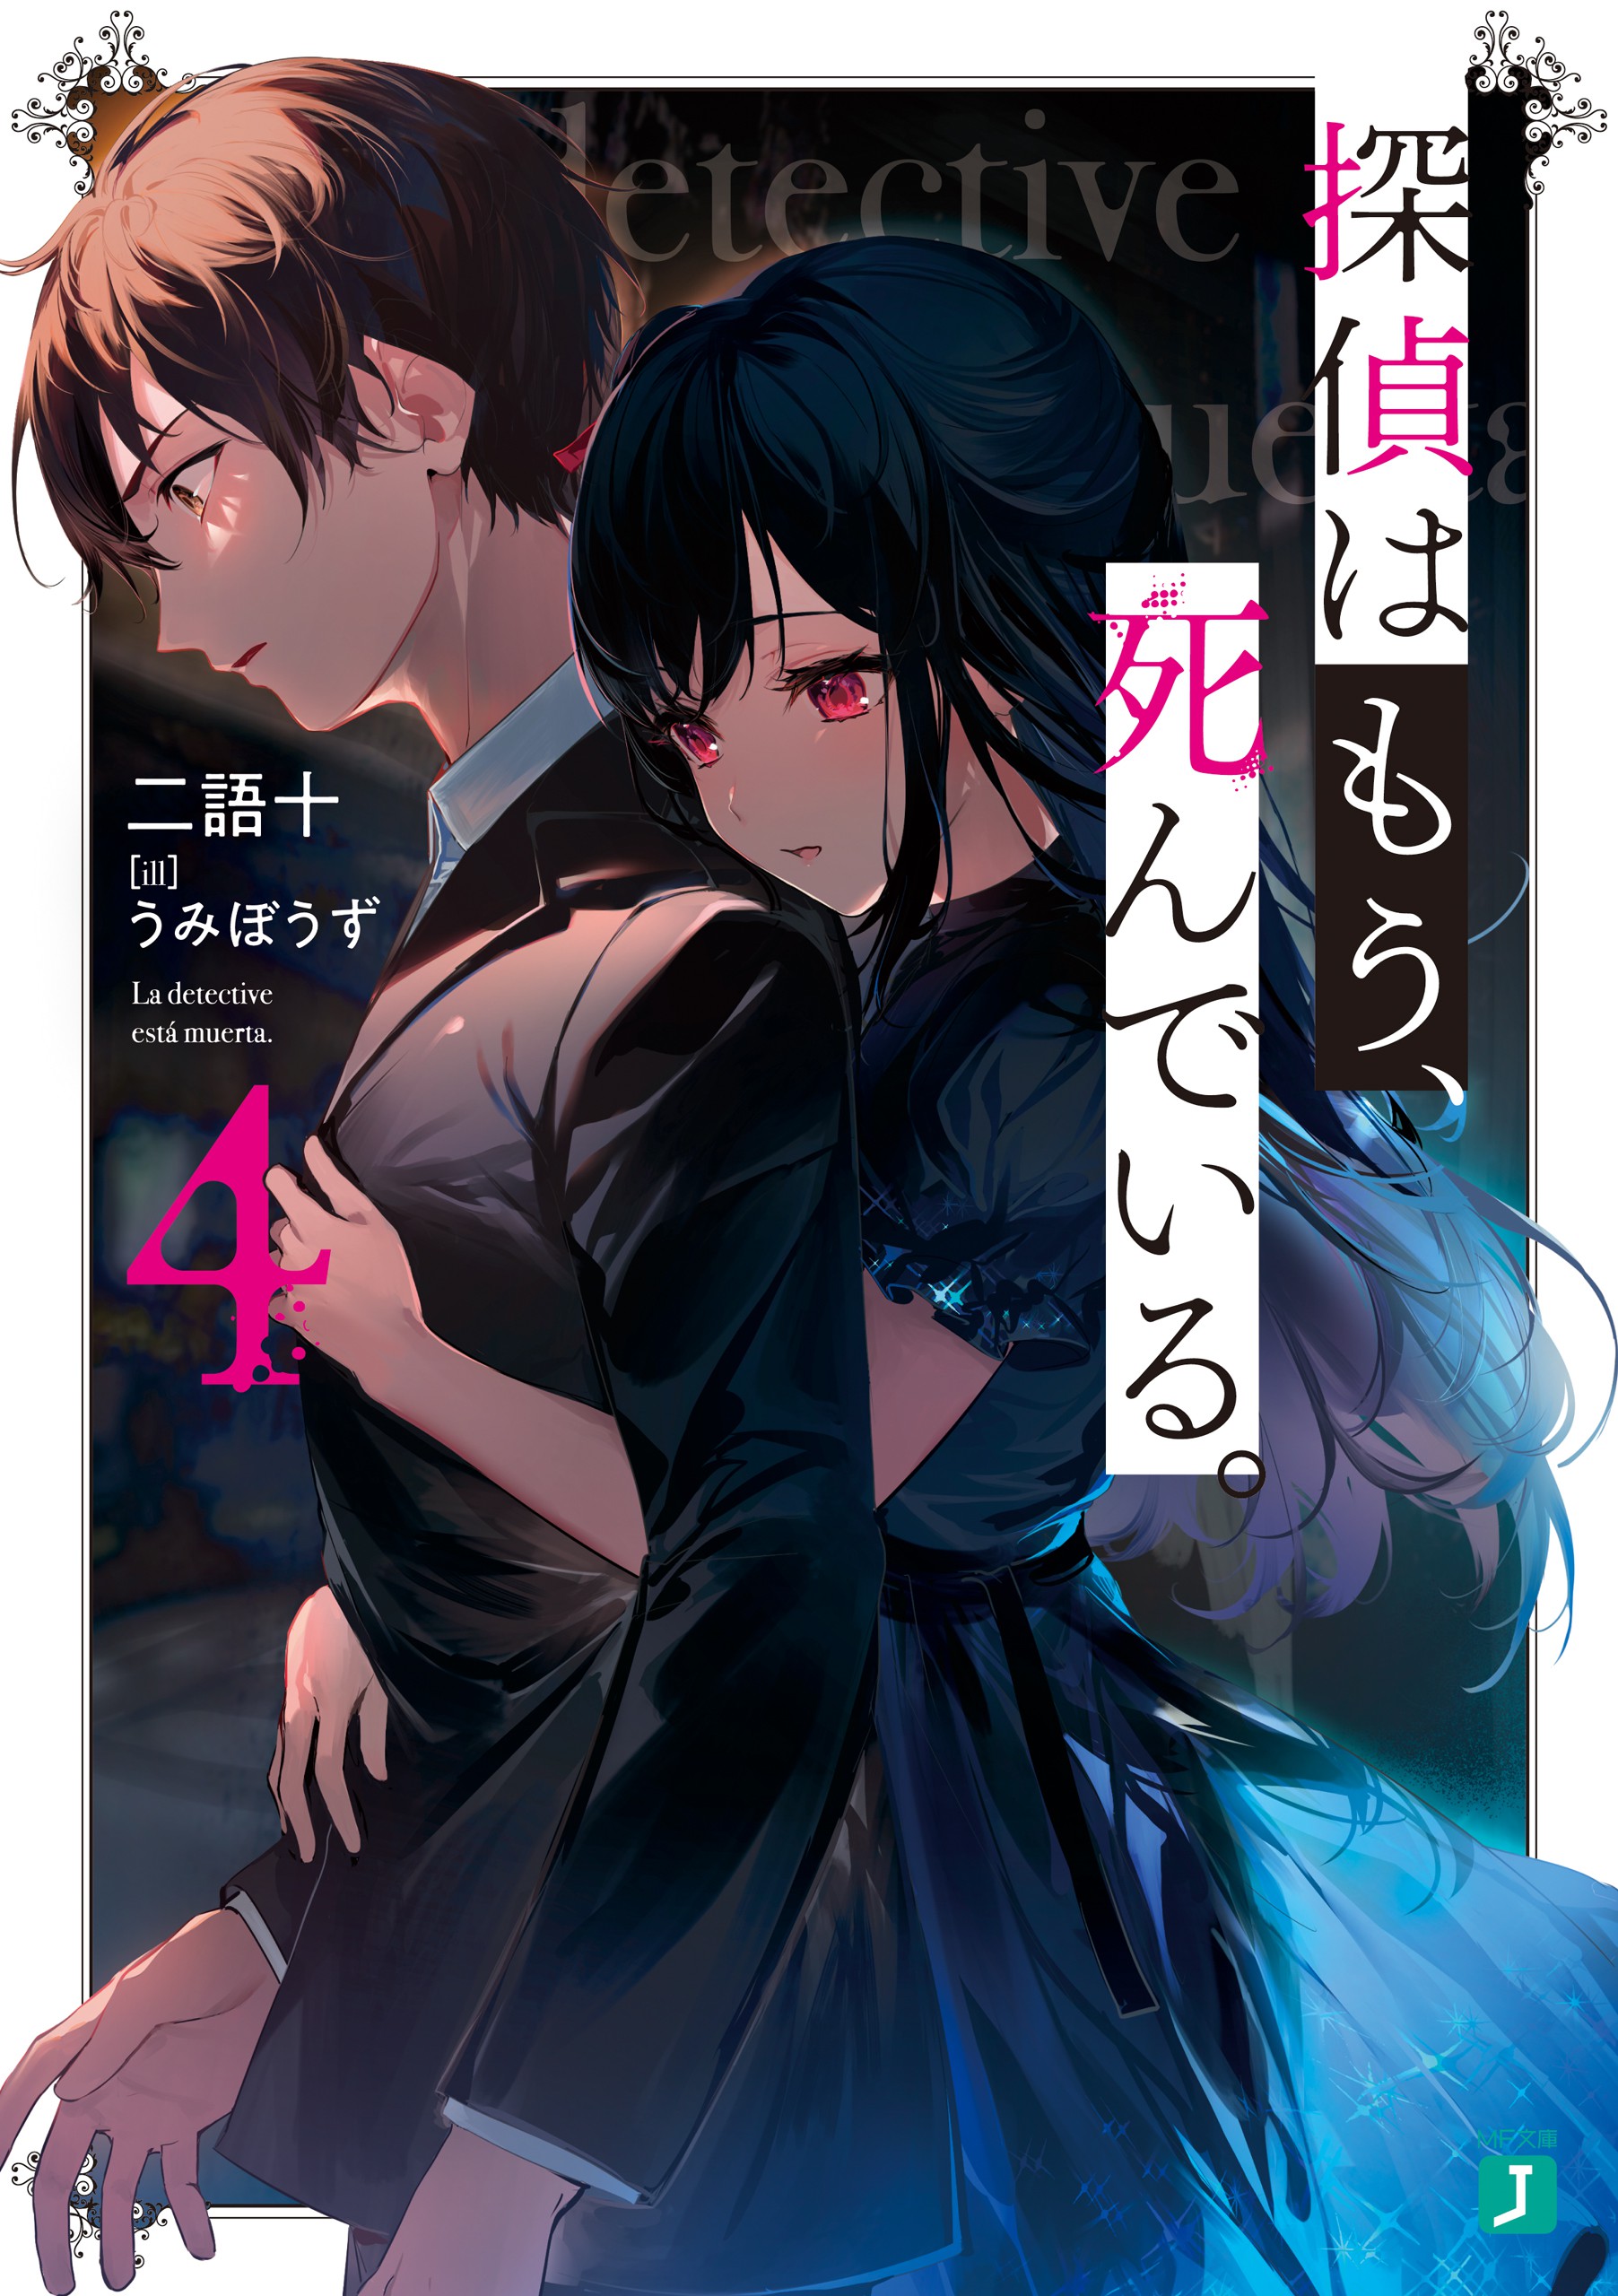 Yagate Kimi ni Naru #4 - Vol. 4 (Issue)